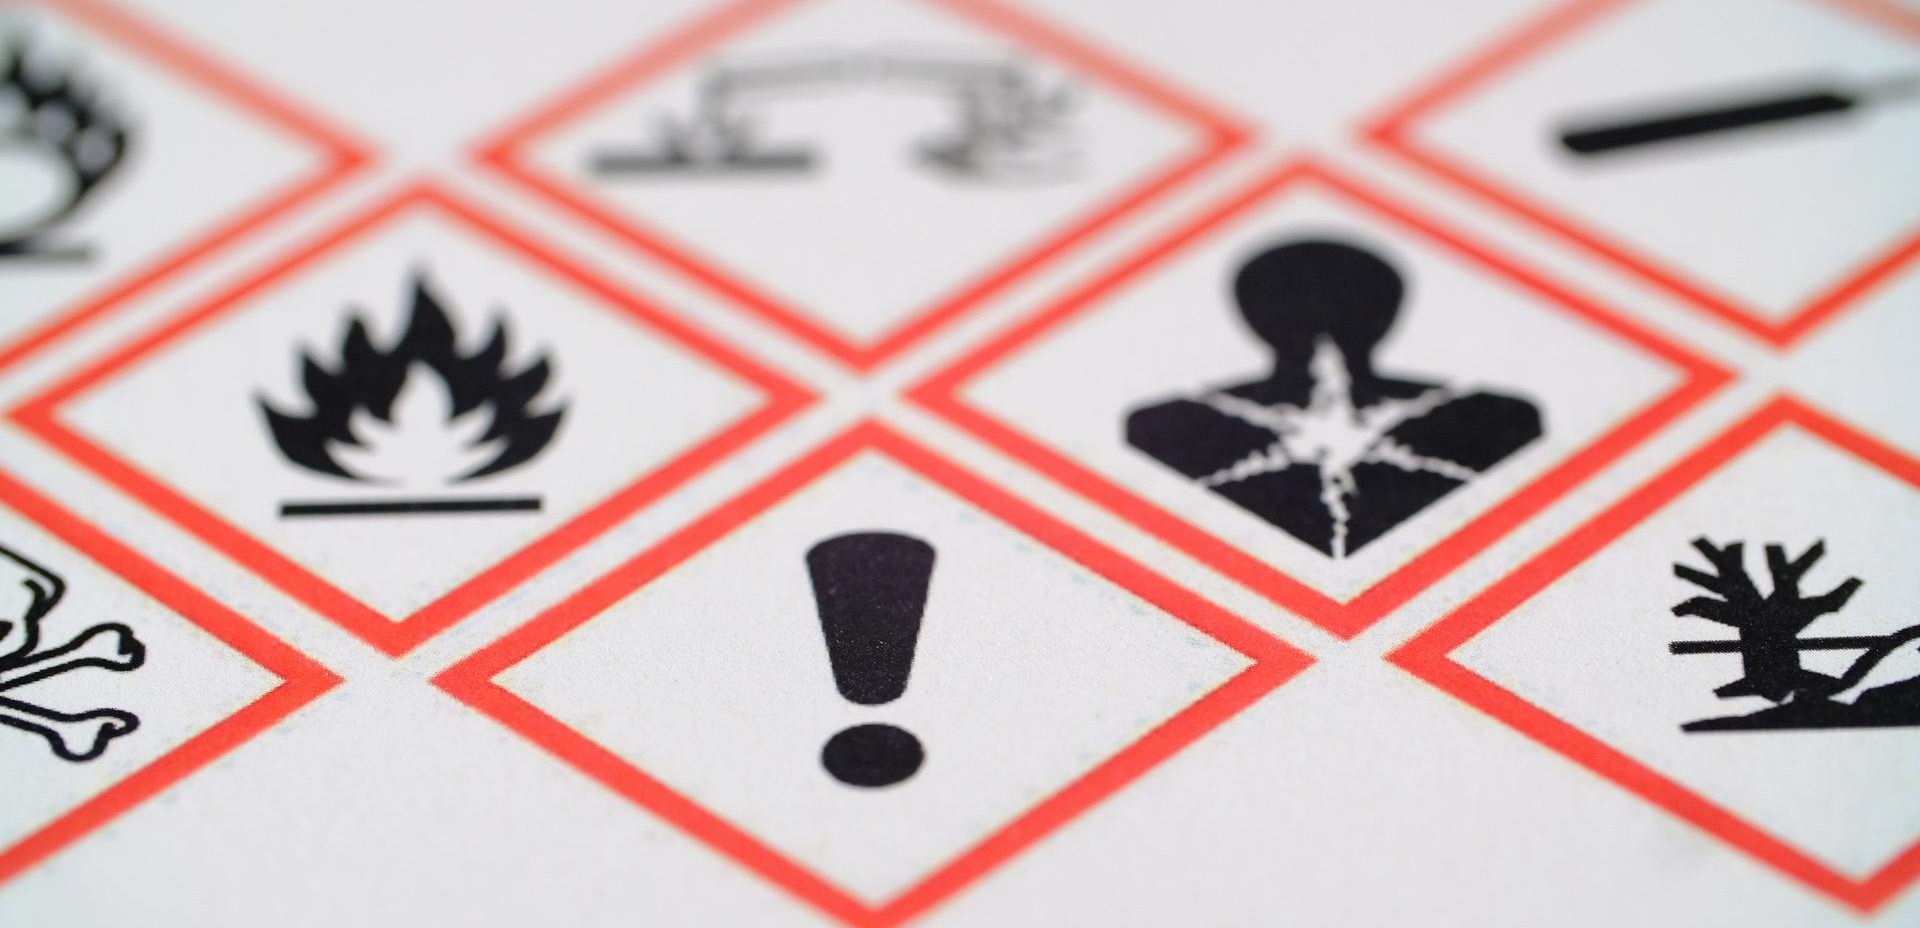 Symbols hazardous materials_stock